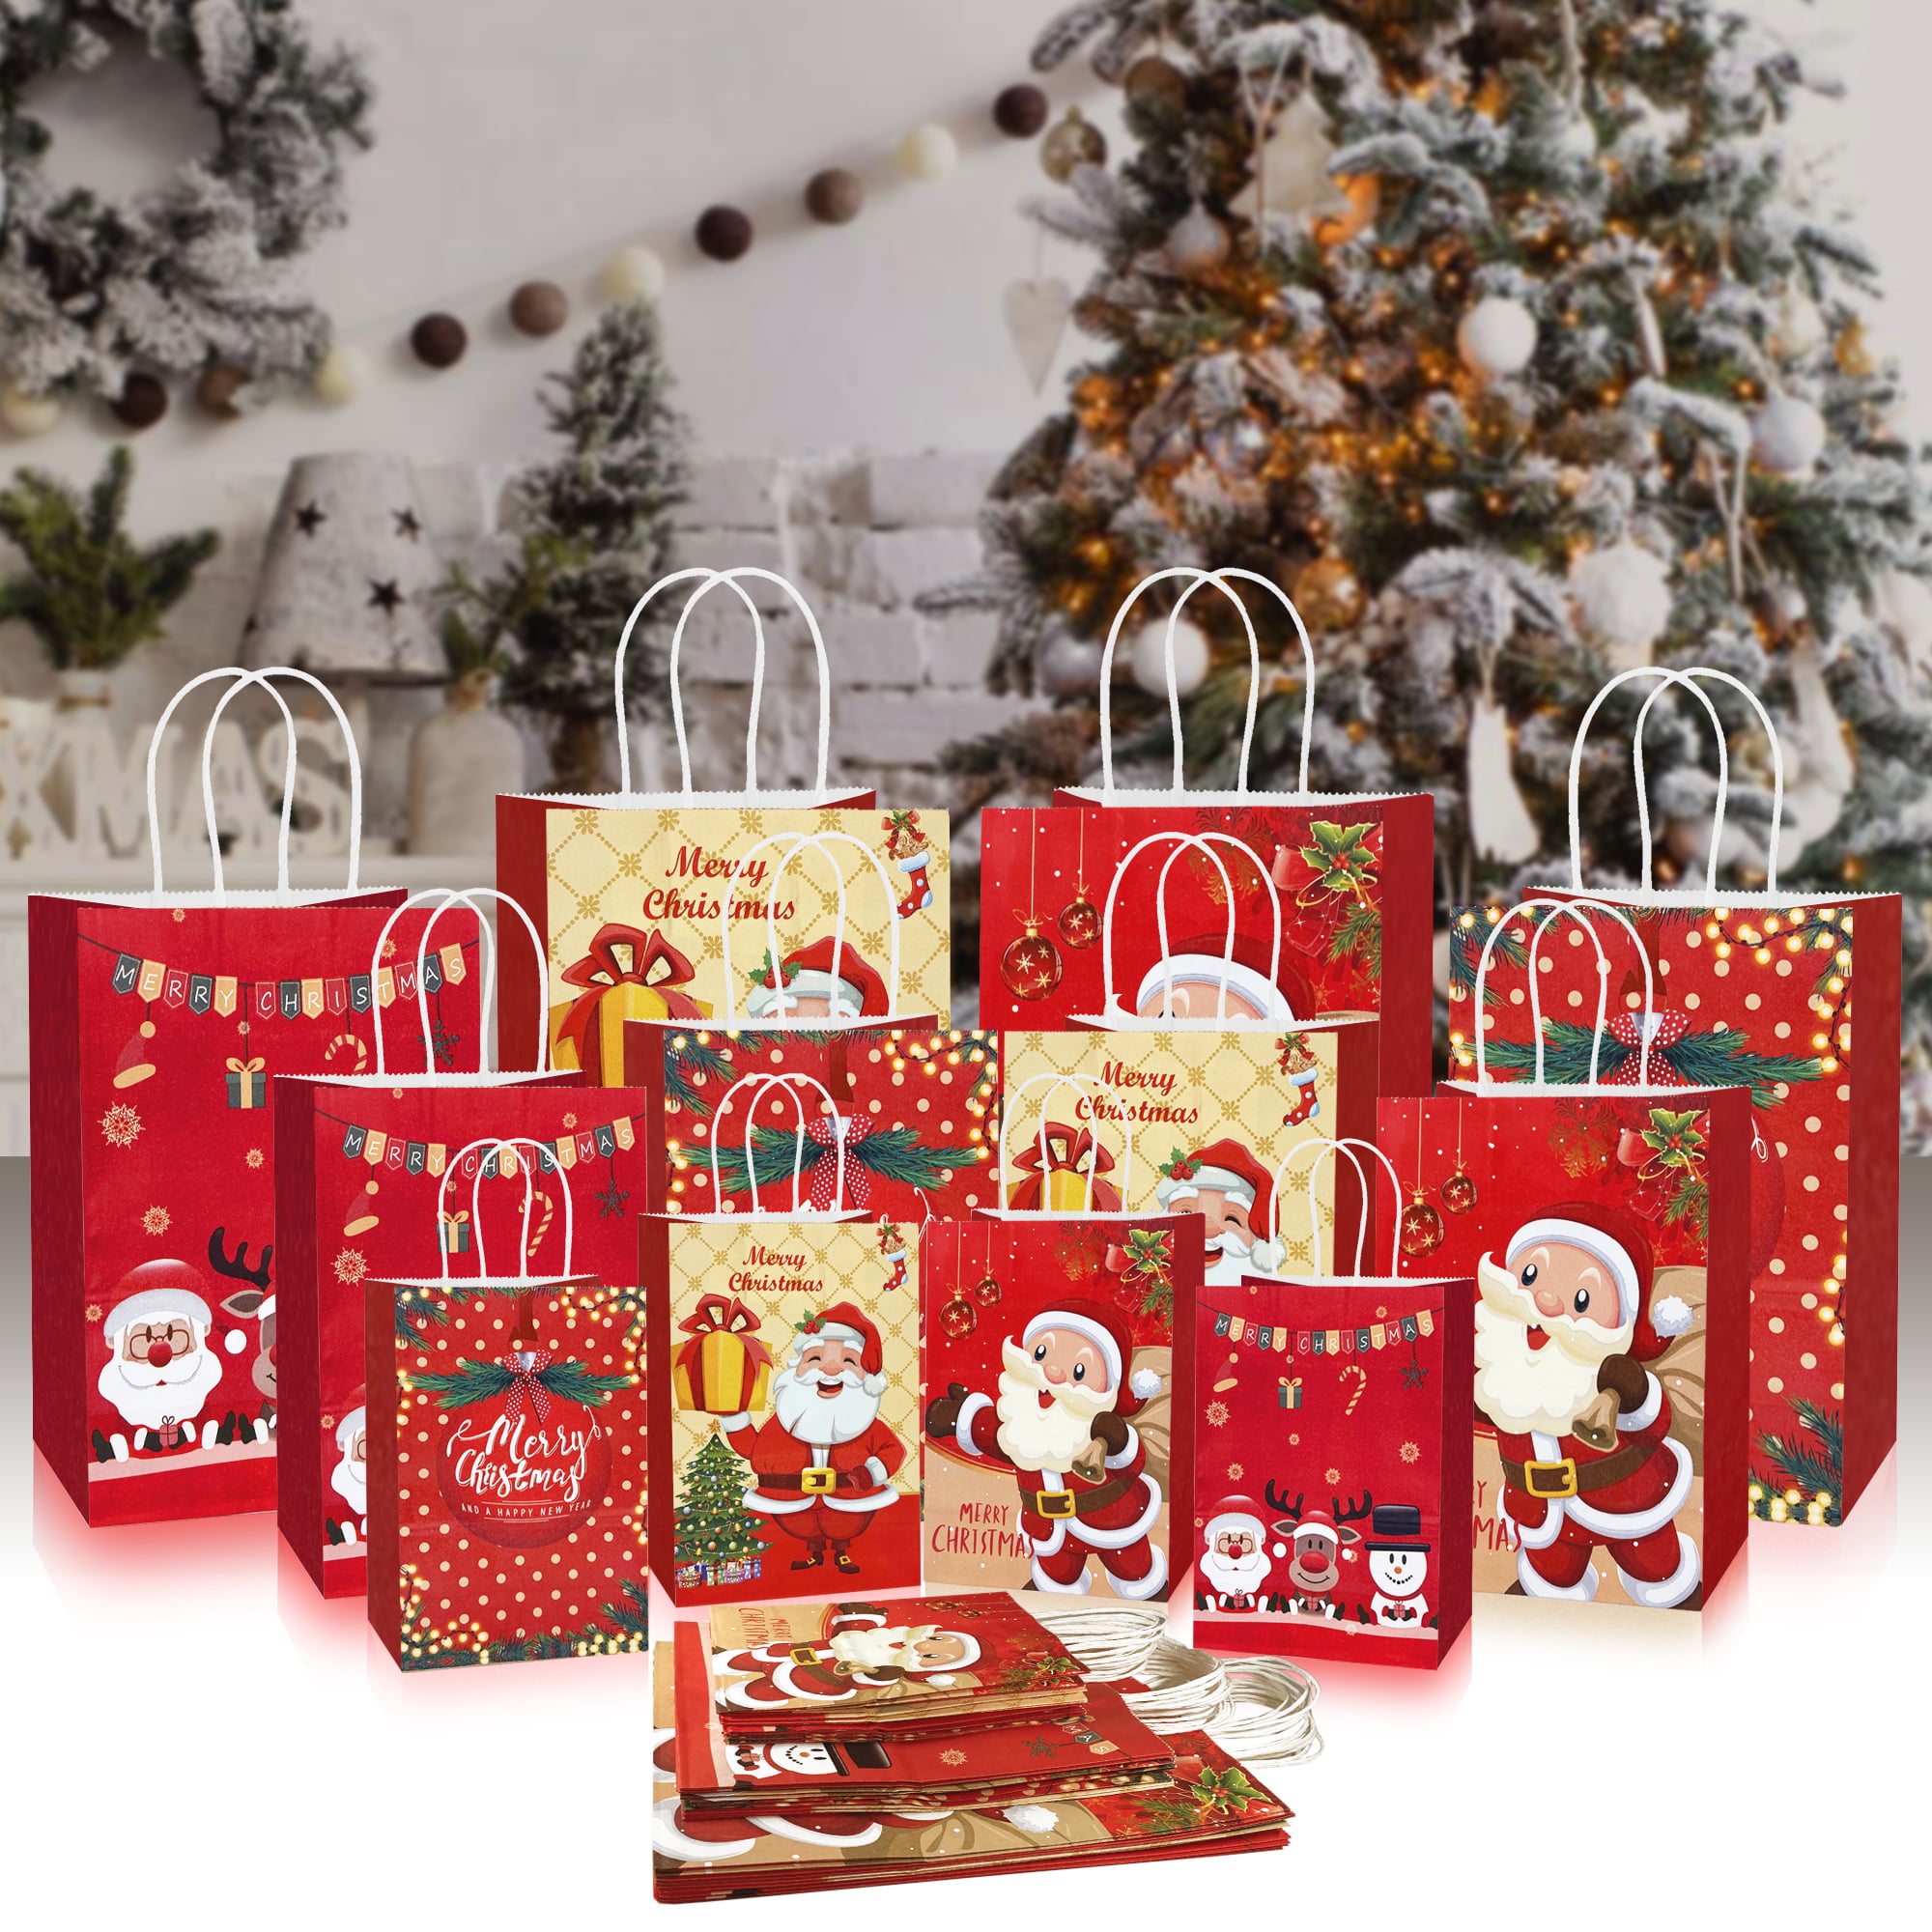 2 x Medium Christmas Traditional Santa Gift Bags Packaging Xmas Paper Bags New 